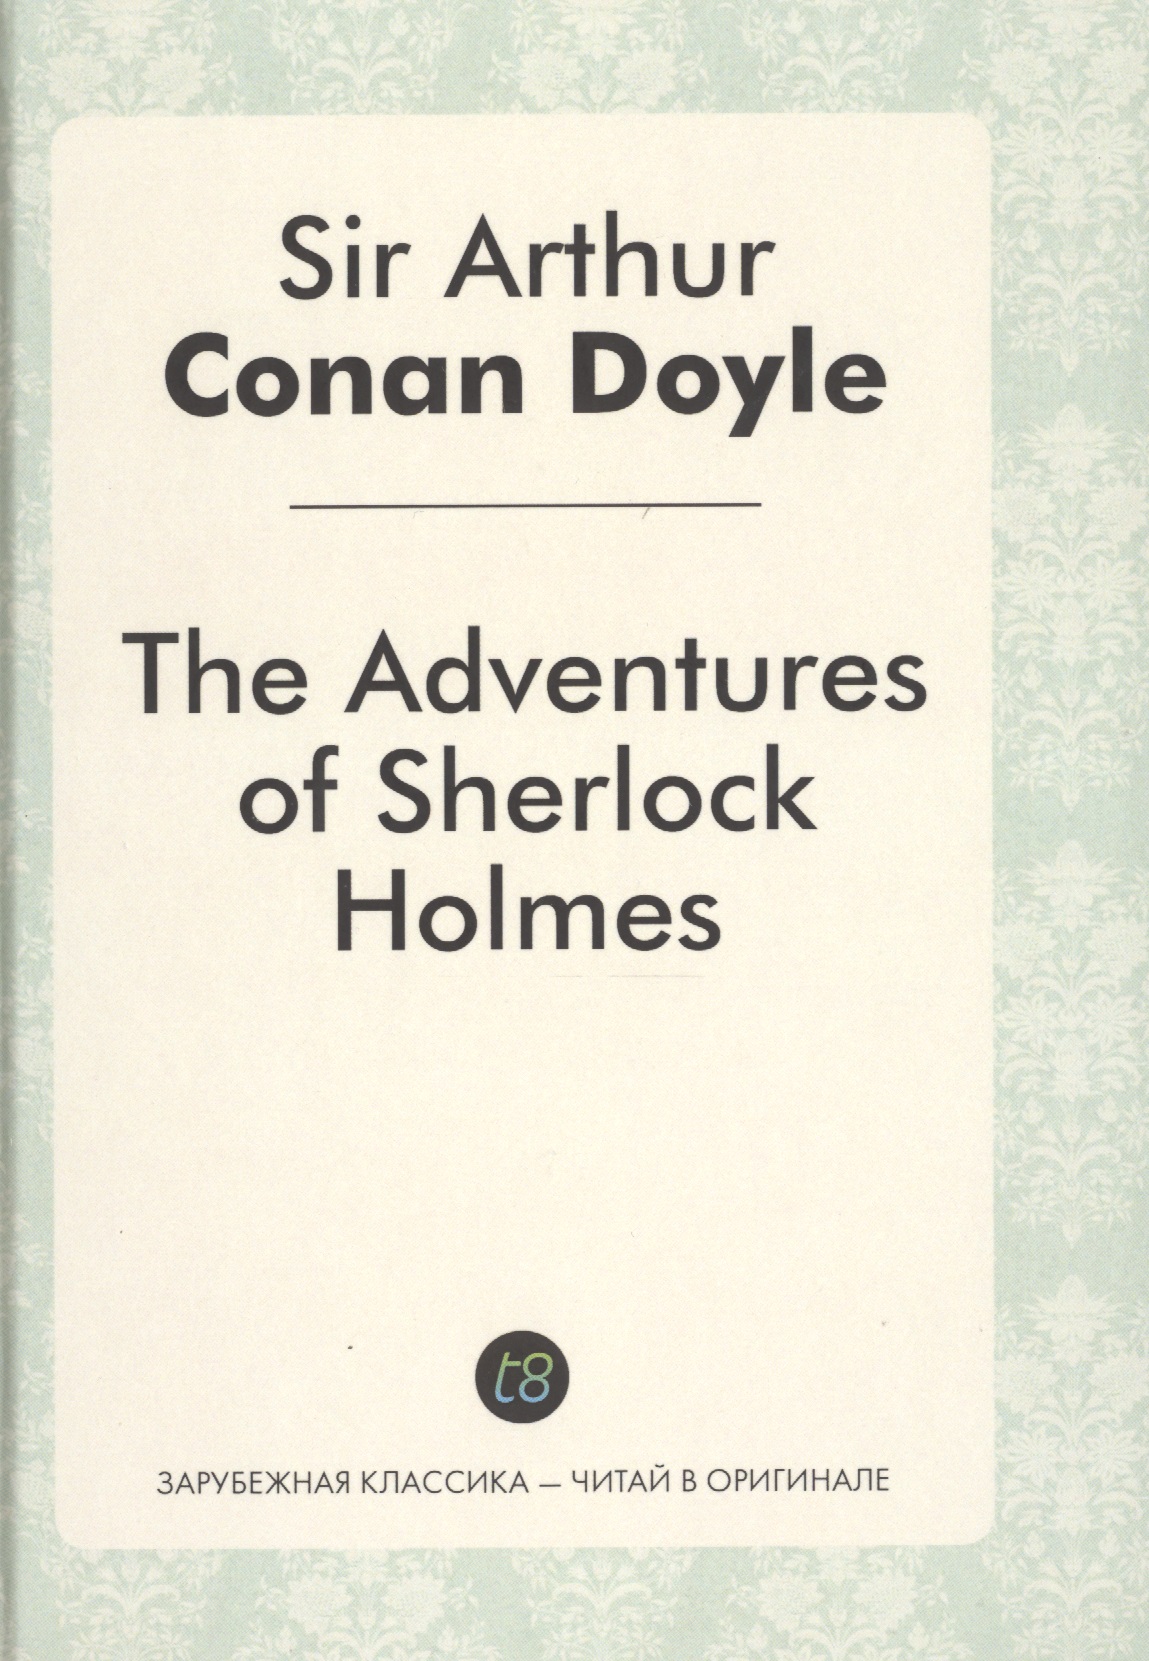 дойл артур конан the adventures of sherlock holmes iv приключения шерлока холмса iv на англ яз Дойл Артур Конан The Adventures of Sherlock Holmes = Приключения Шерлока Холмса: рассказы на англ.яз